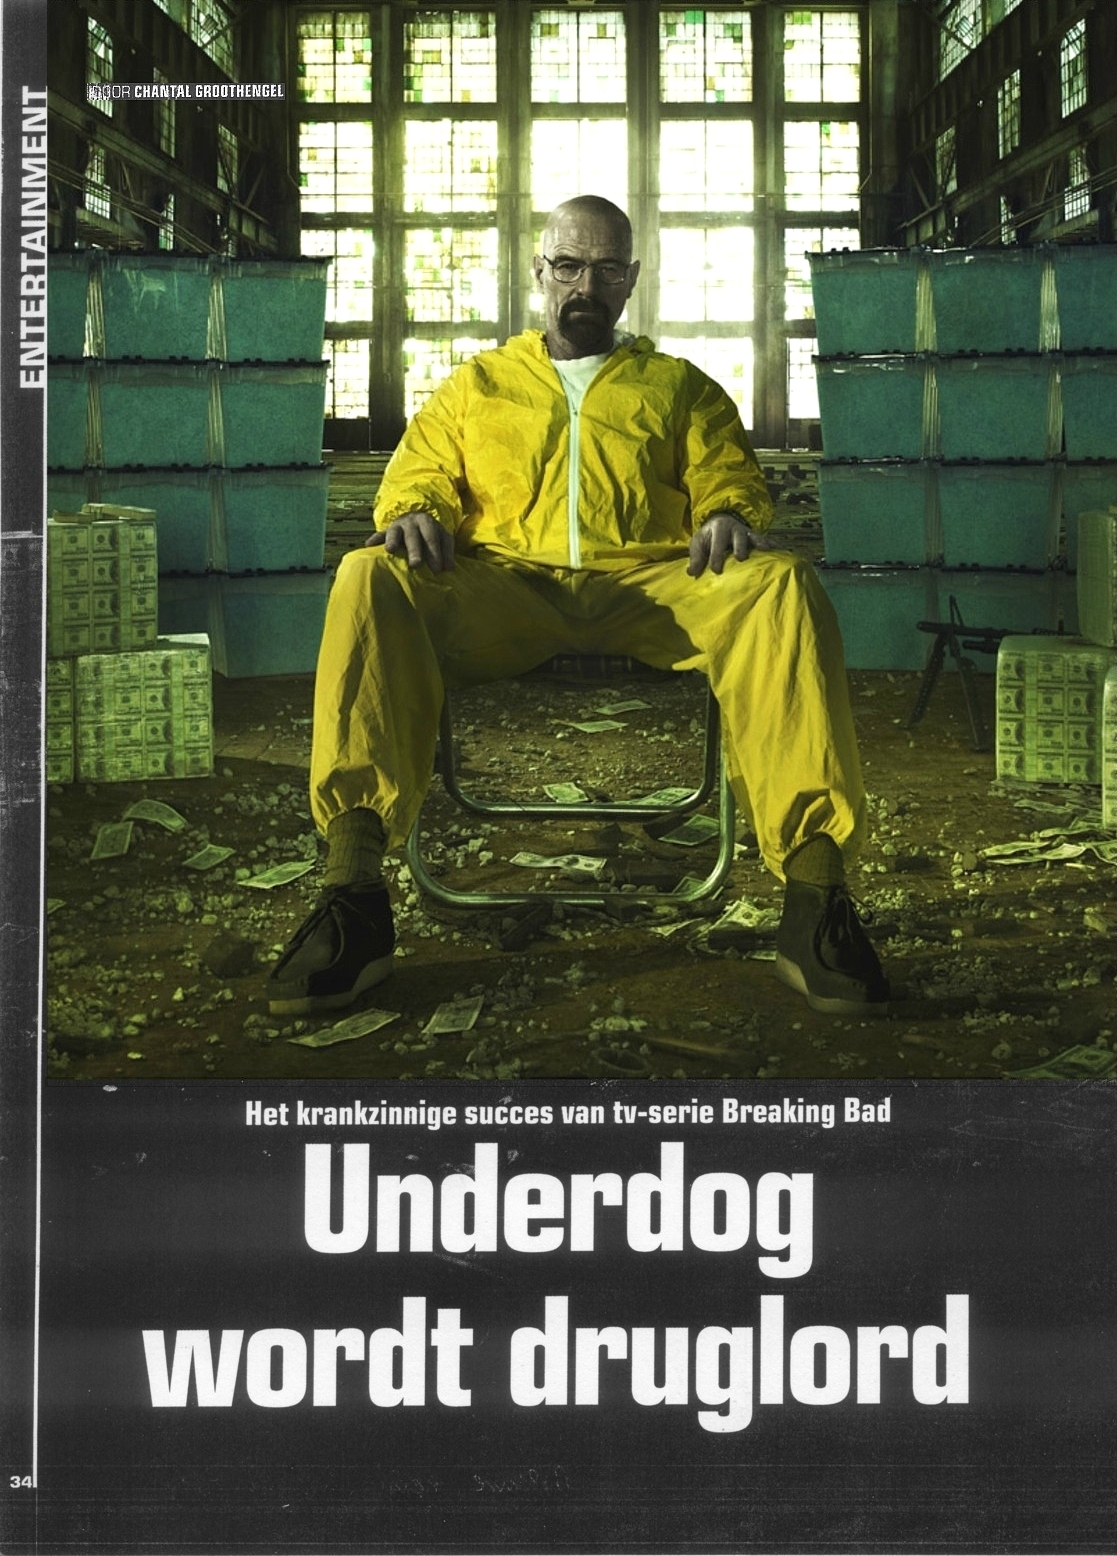 Dutch Nieuwe Revu magazine, July 11, 2012